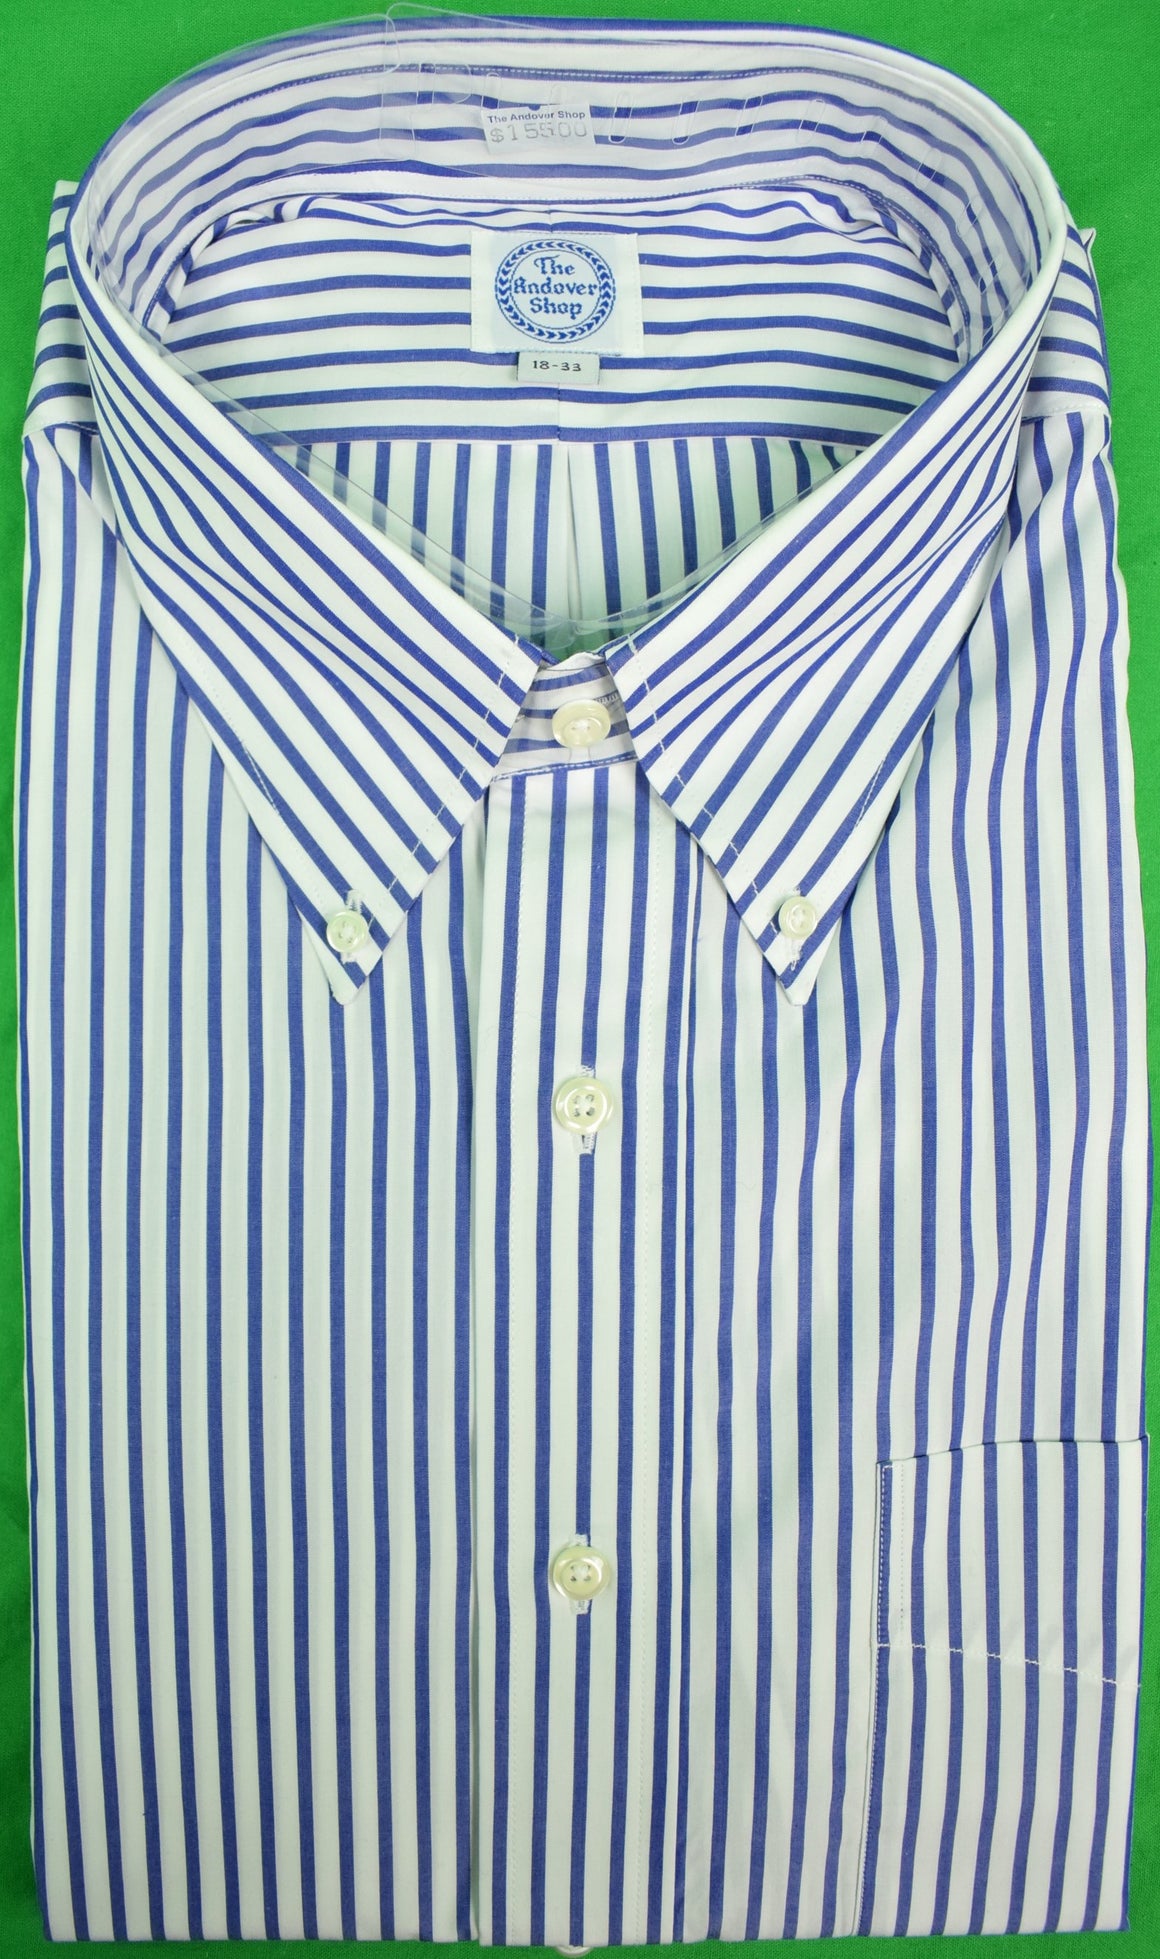 The Andover Shop Blue & White Bengal Stripe BD Dress Shirt Sz: 18-33 New w/ Tag!